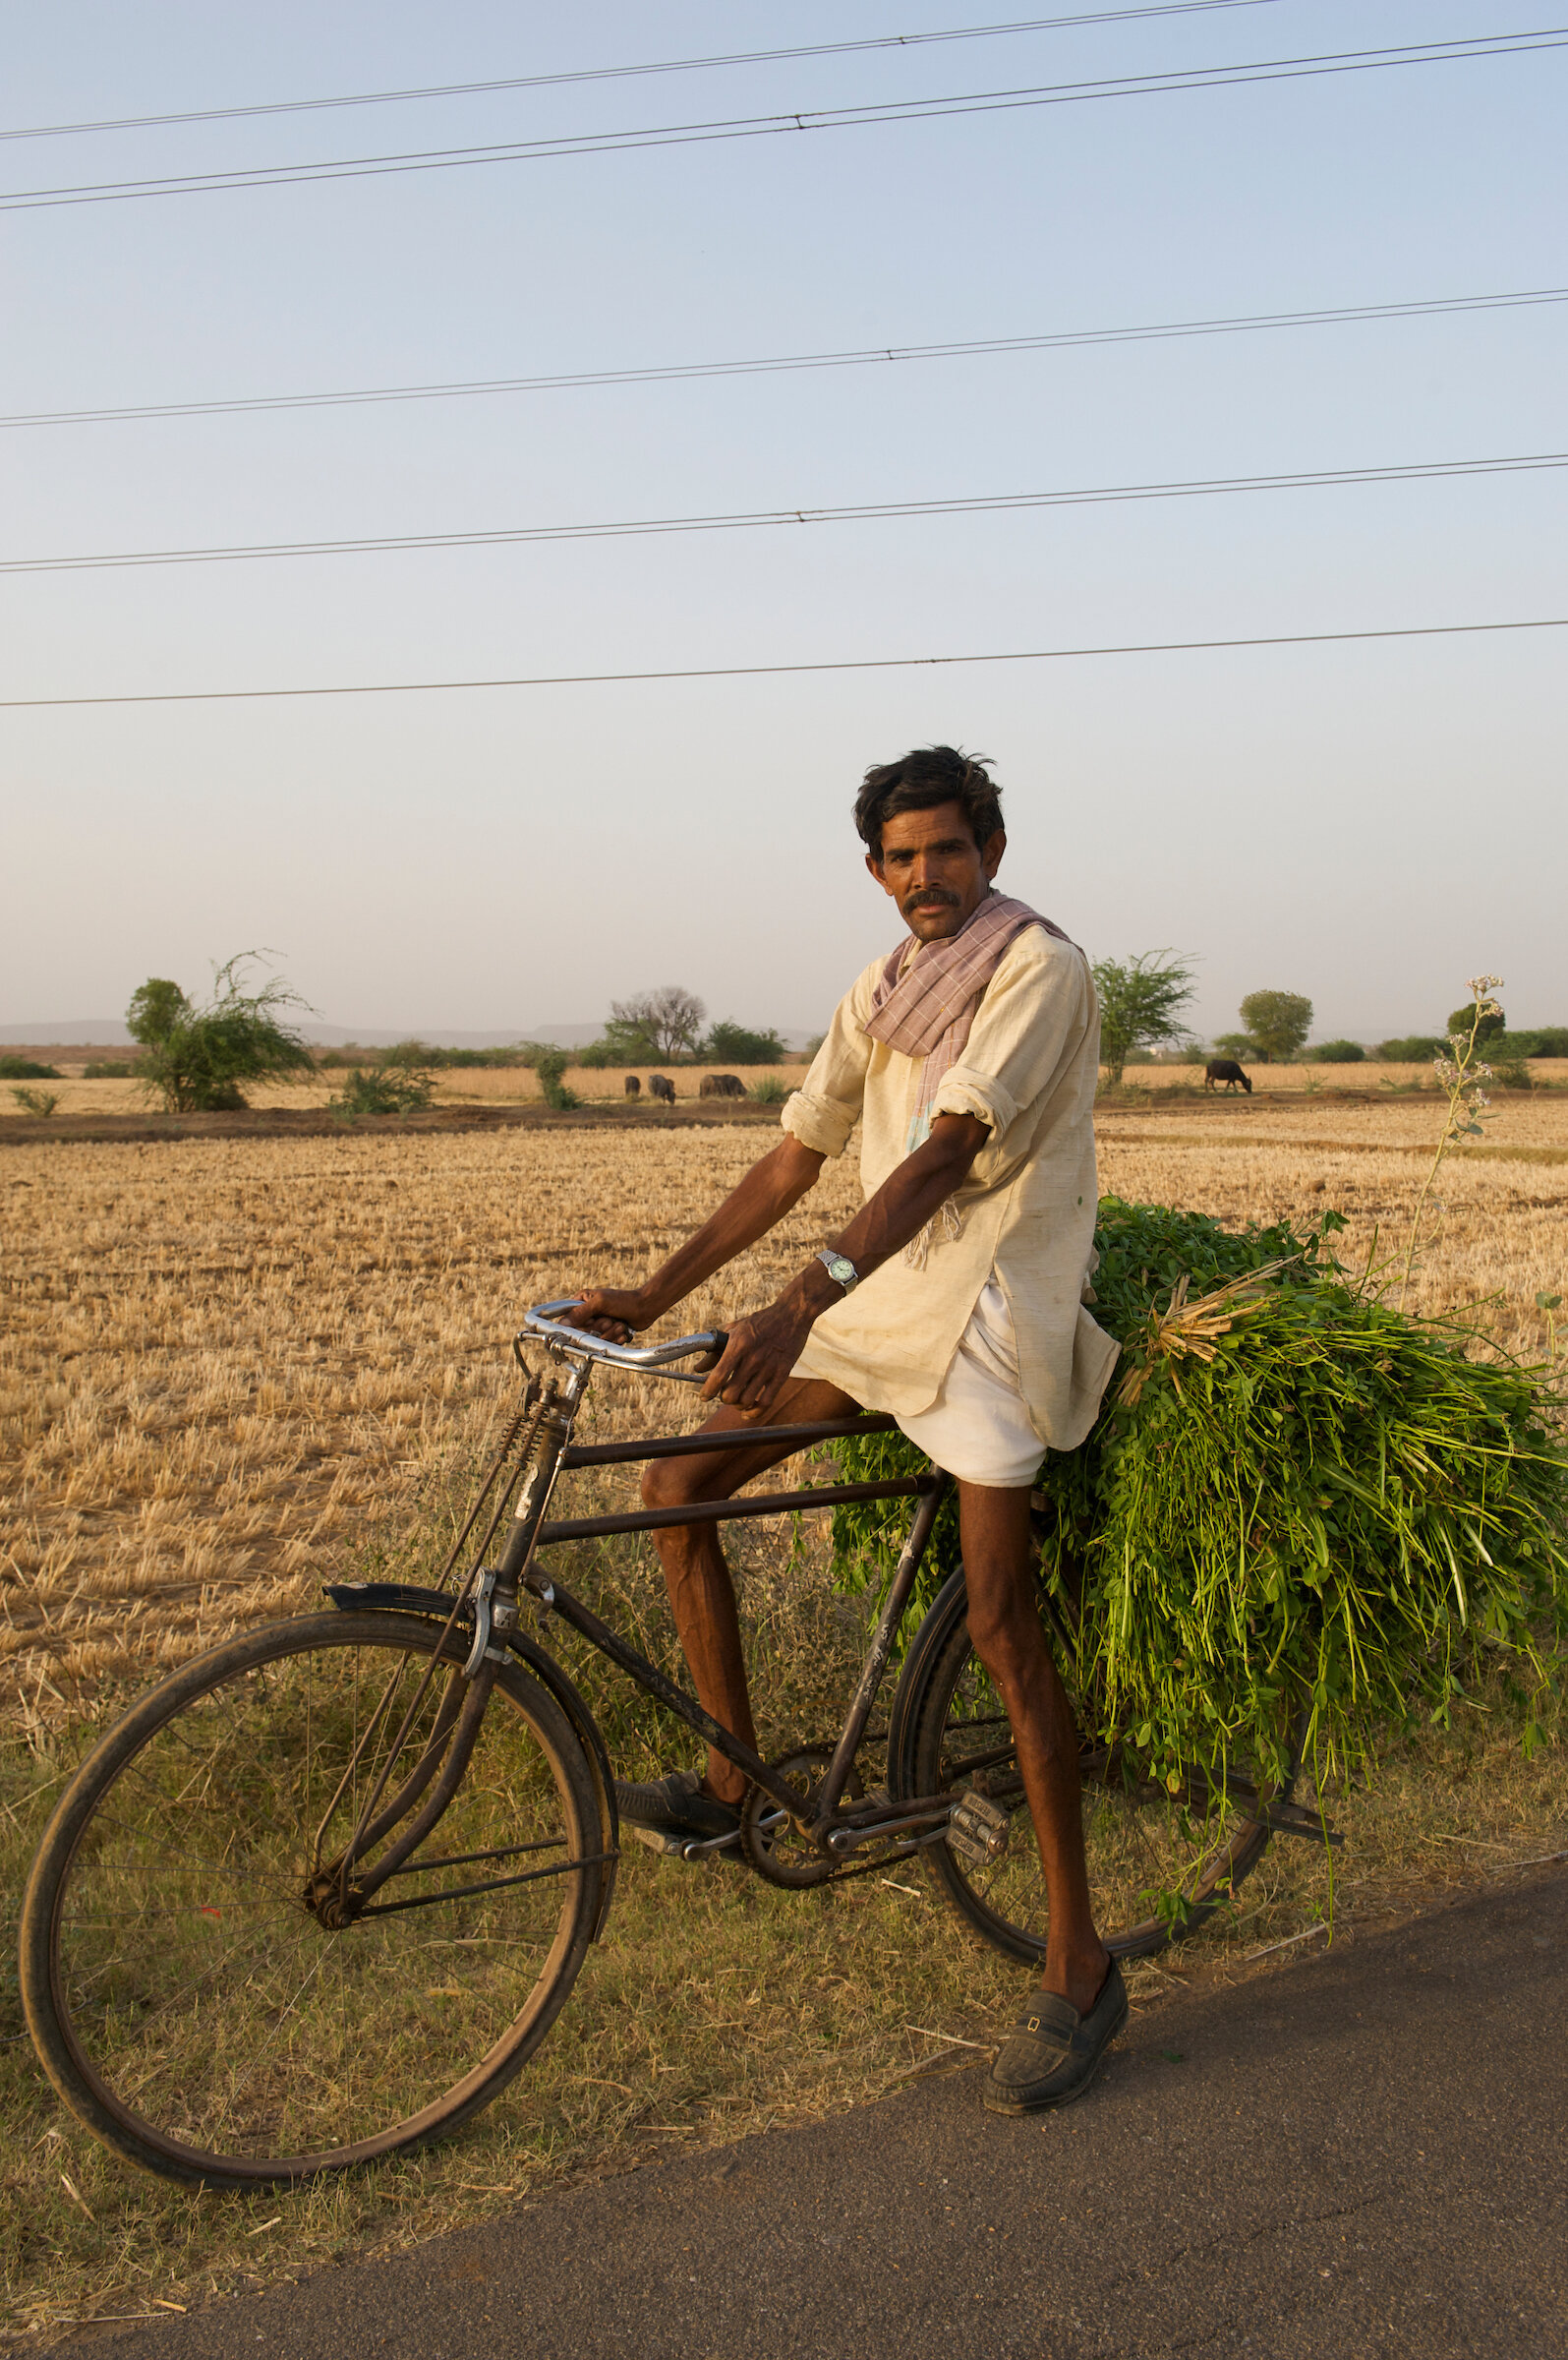  Farmer - Barundhan, India 